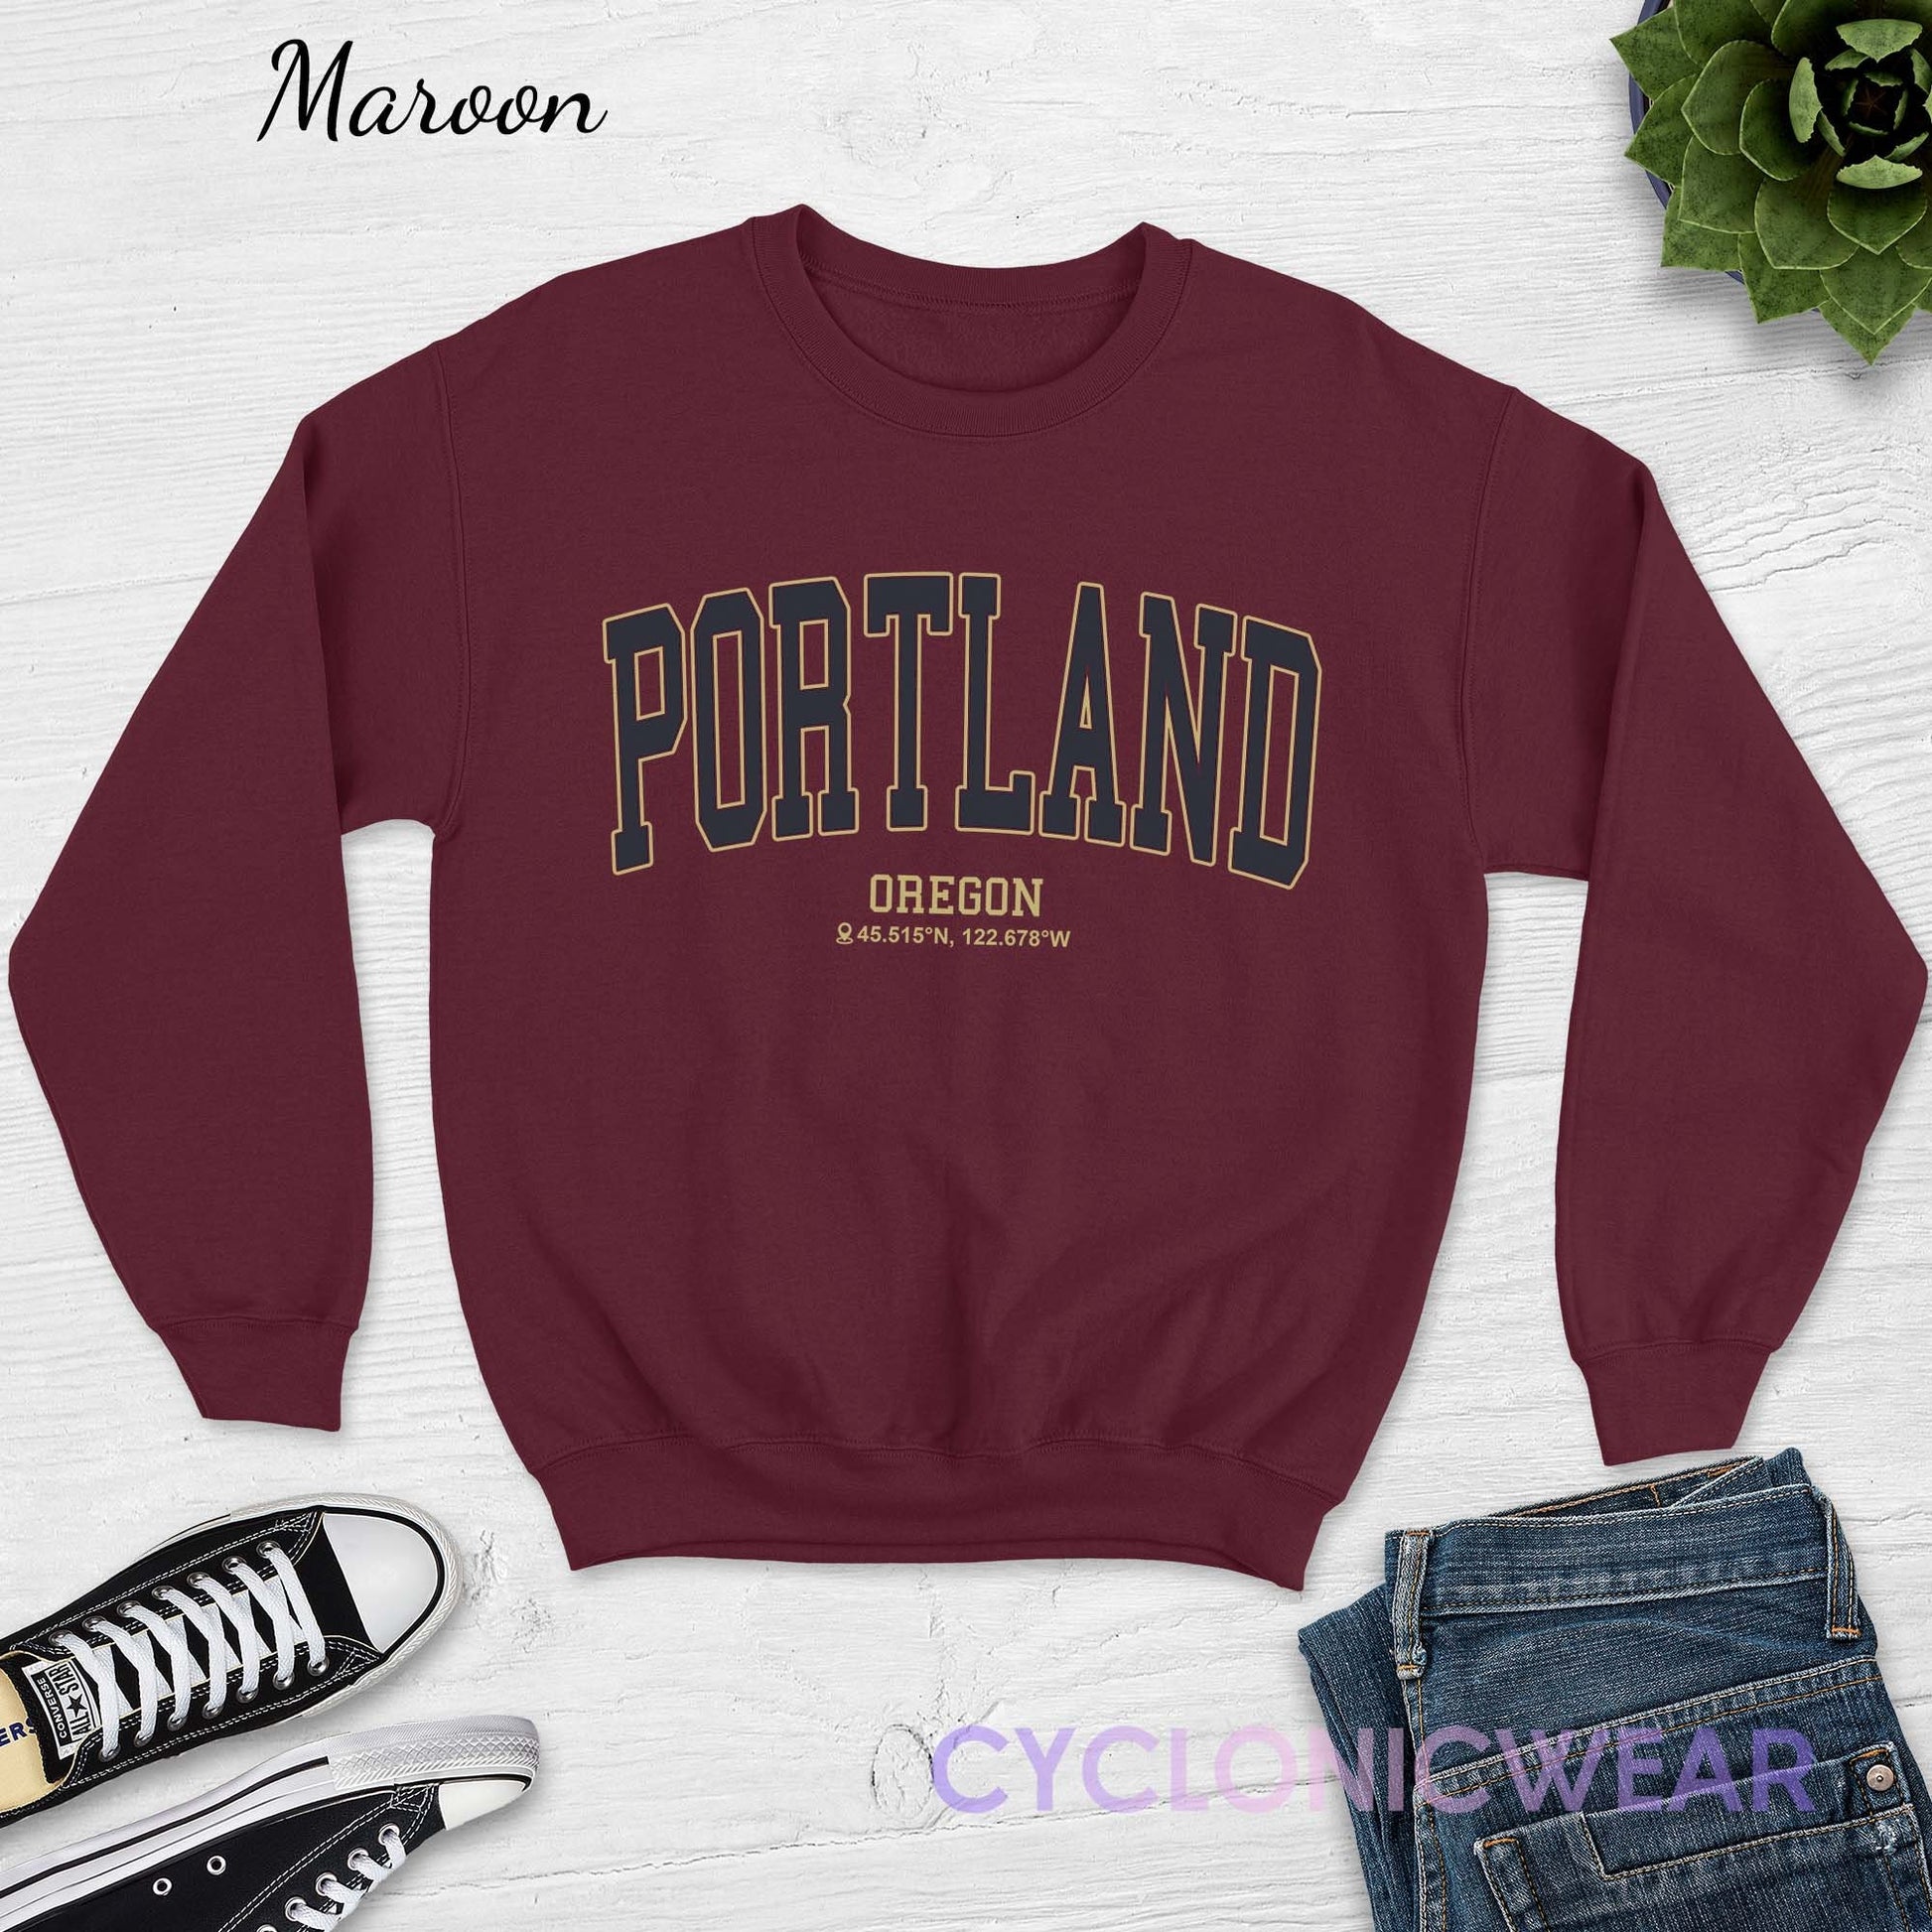 USA College Sweatshirt - Bottle Green - Portland Clothing